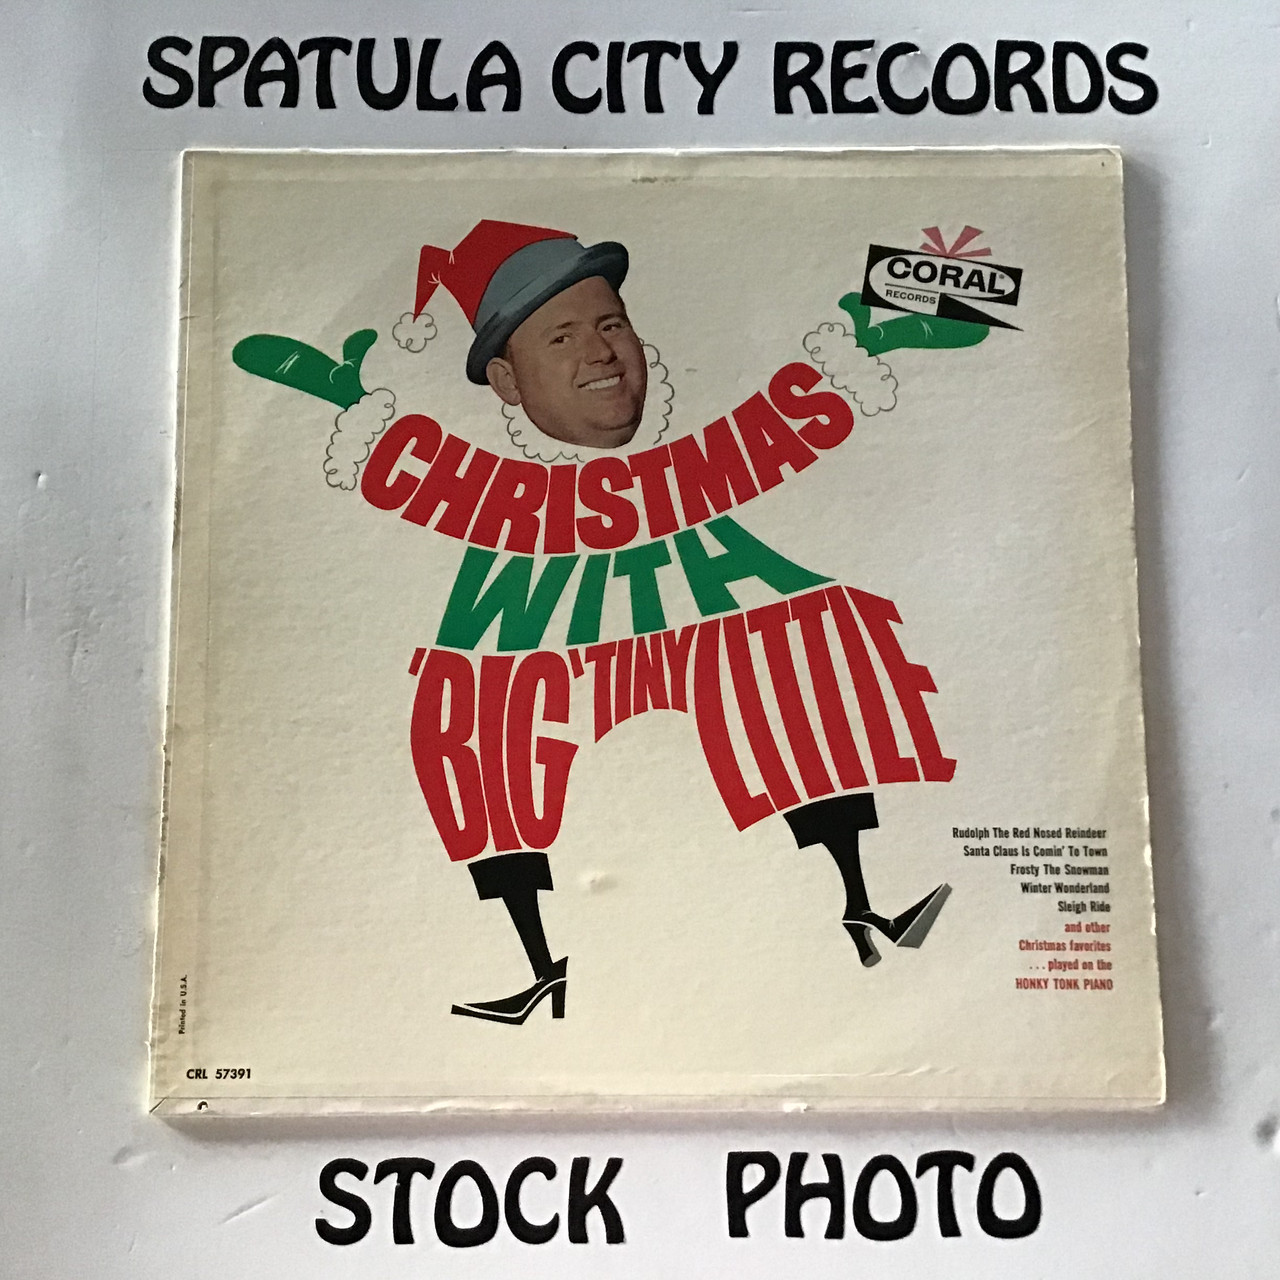 "Big Tiny Little" - Christmas with "Big" Tiny Little - MONO - vinyl record LP